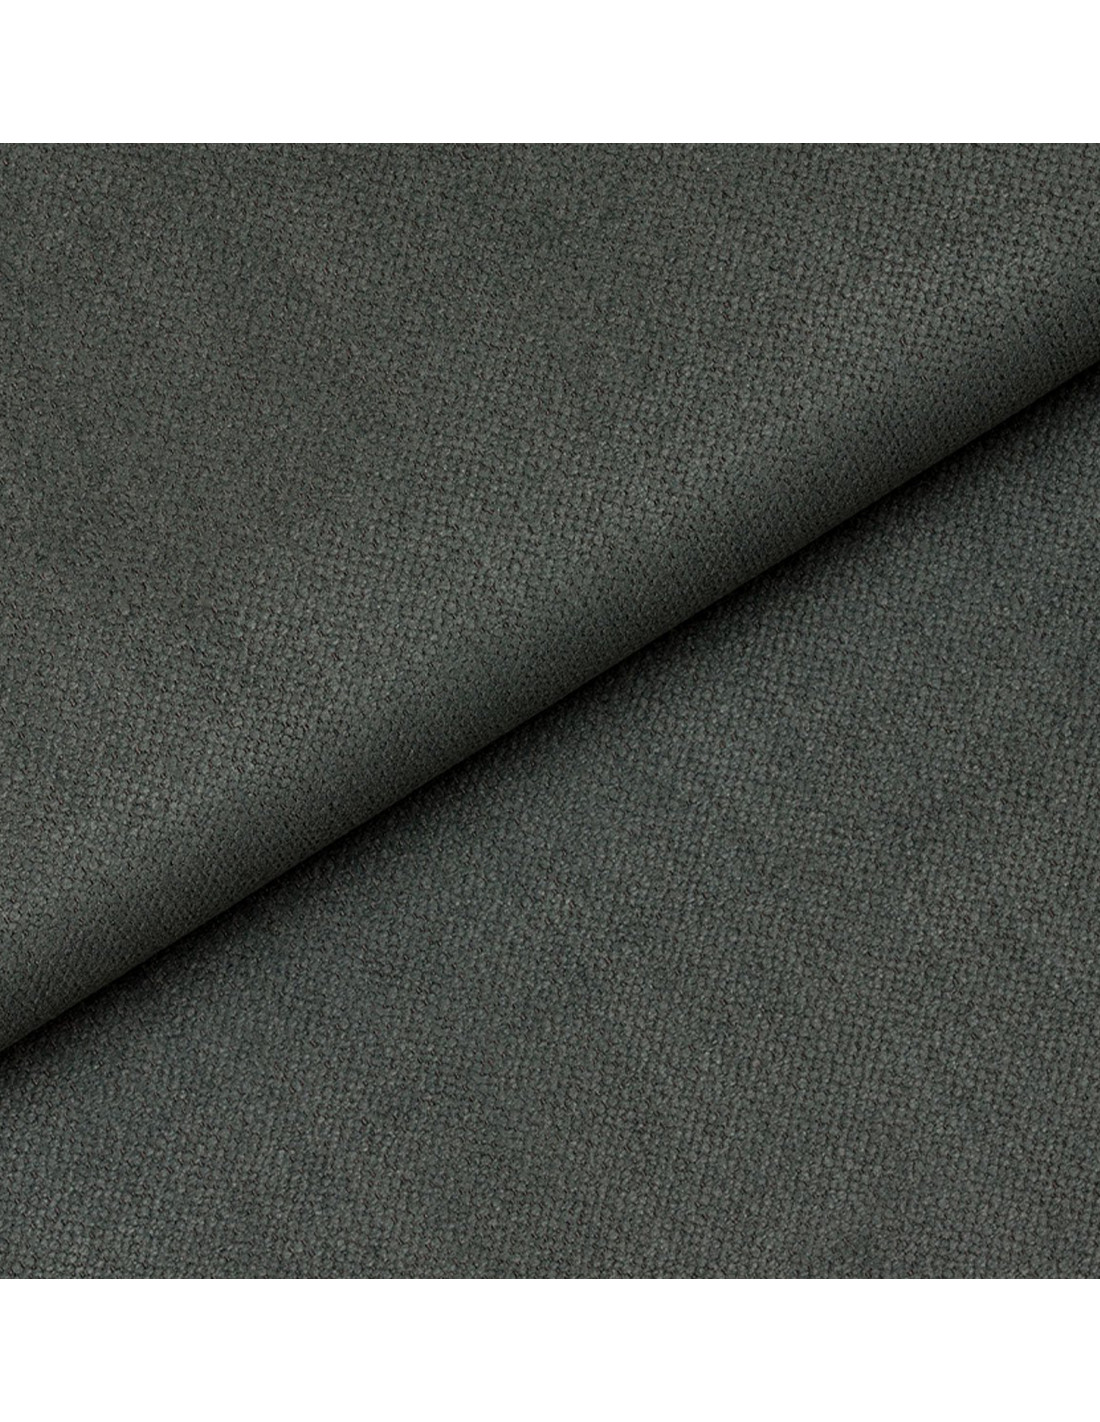 ELBA 29 chenille fabric | sklep internetowy Kameleon.pro